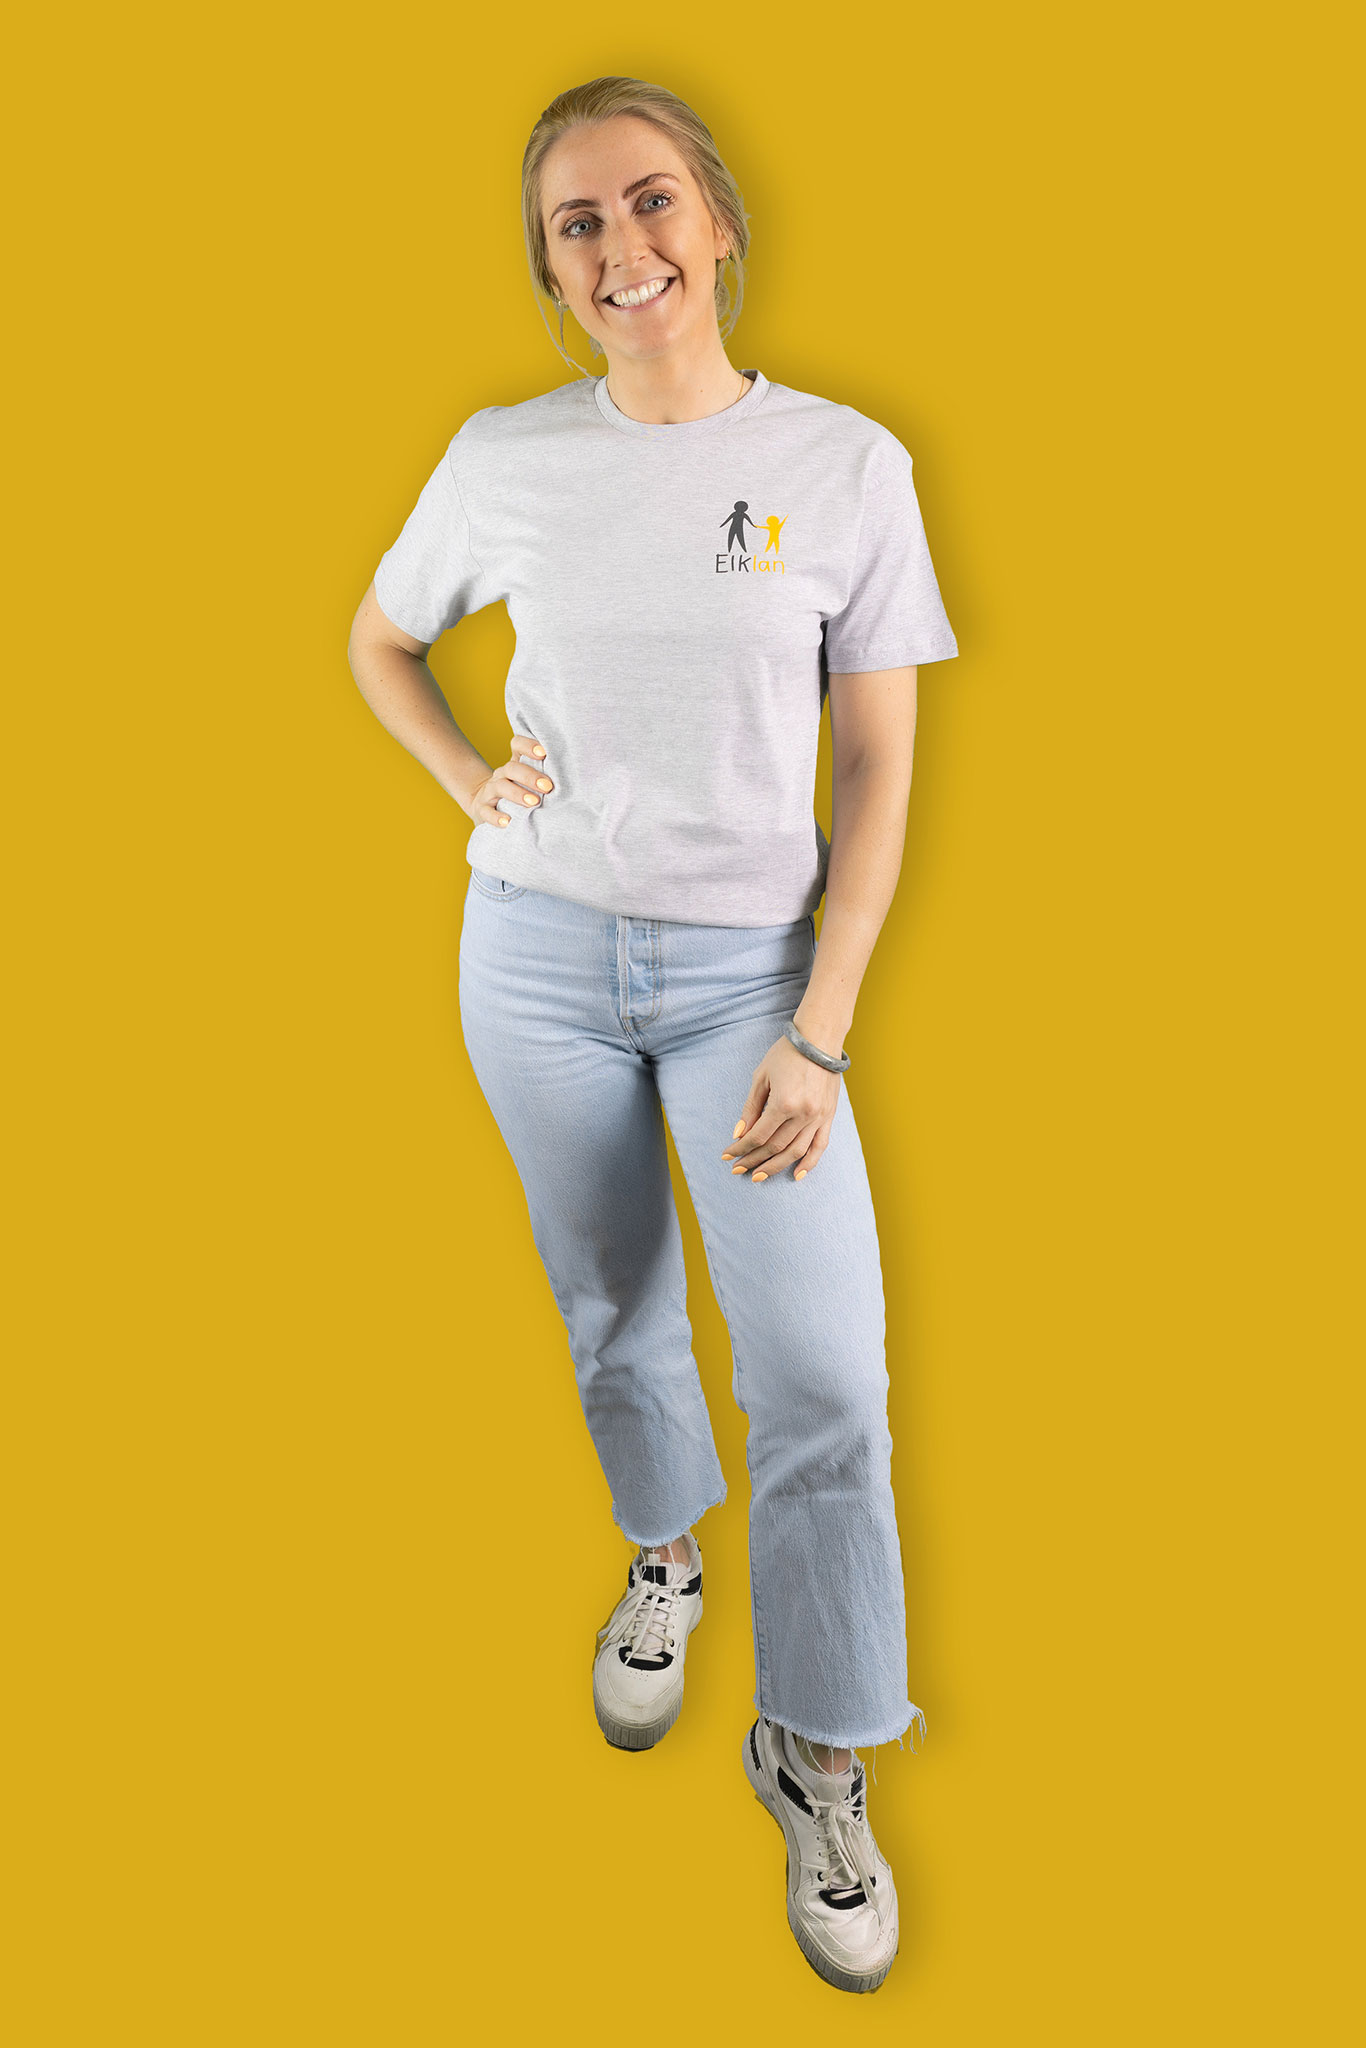 Elklan-branded Heather Grey T-shirt sample image